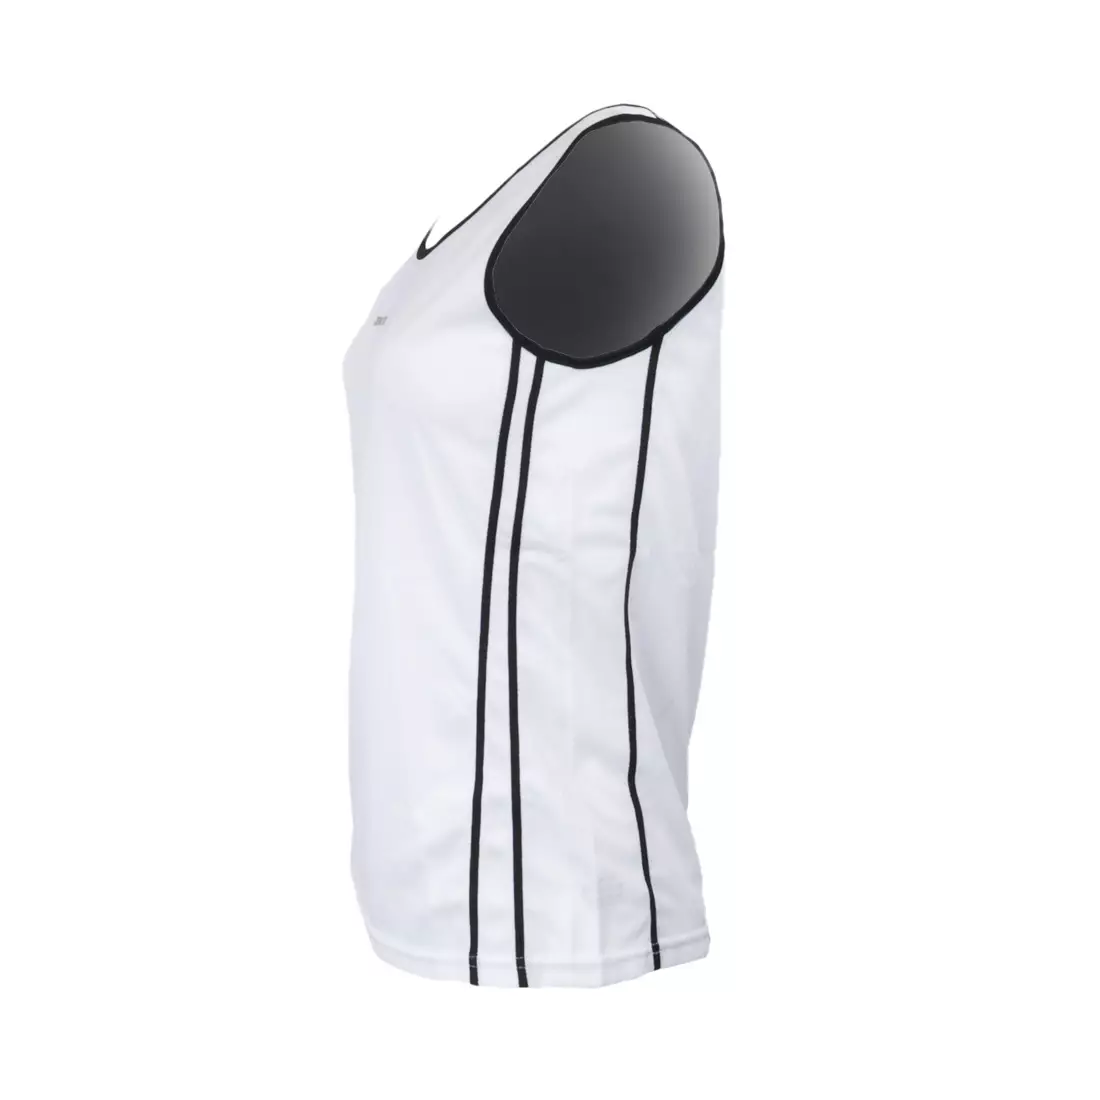 NEWLINE SINGLET - women's running shirt, sleeveless 16671-02